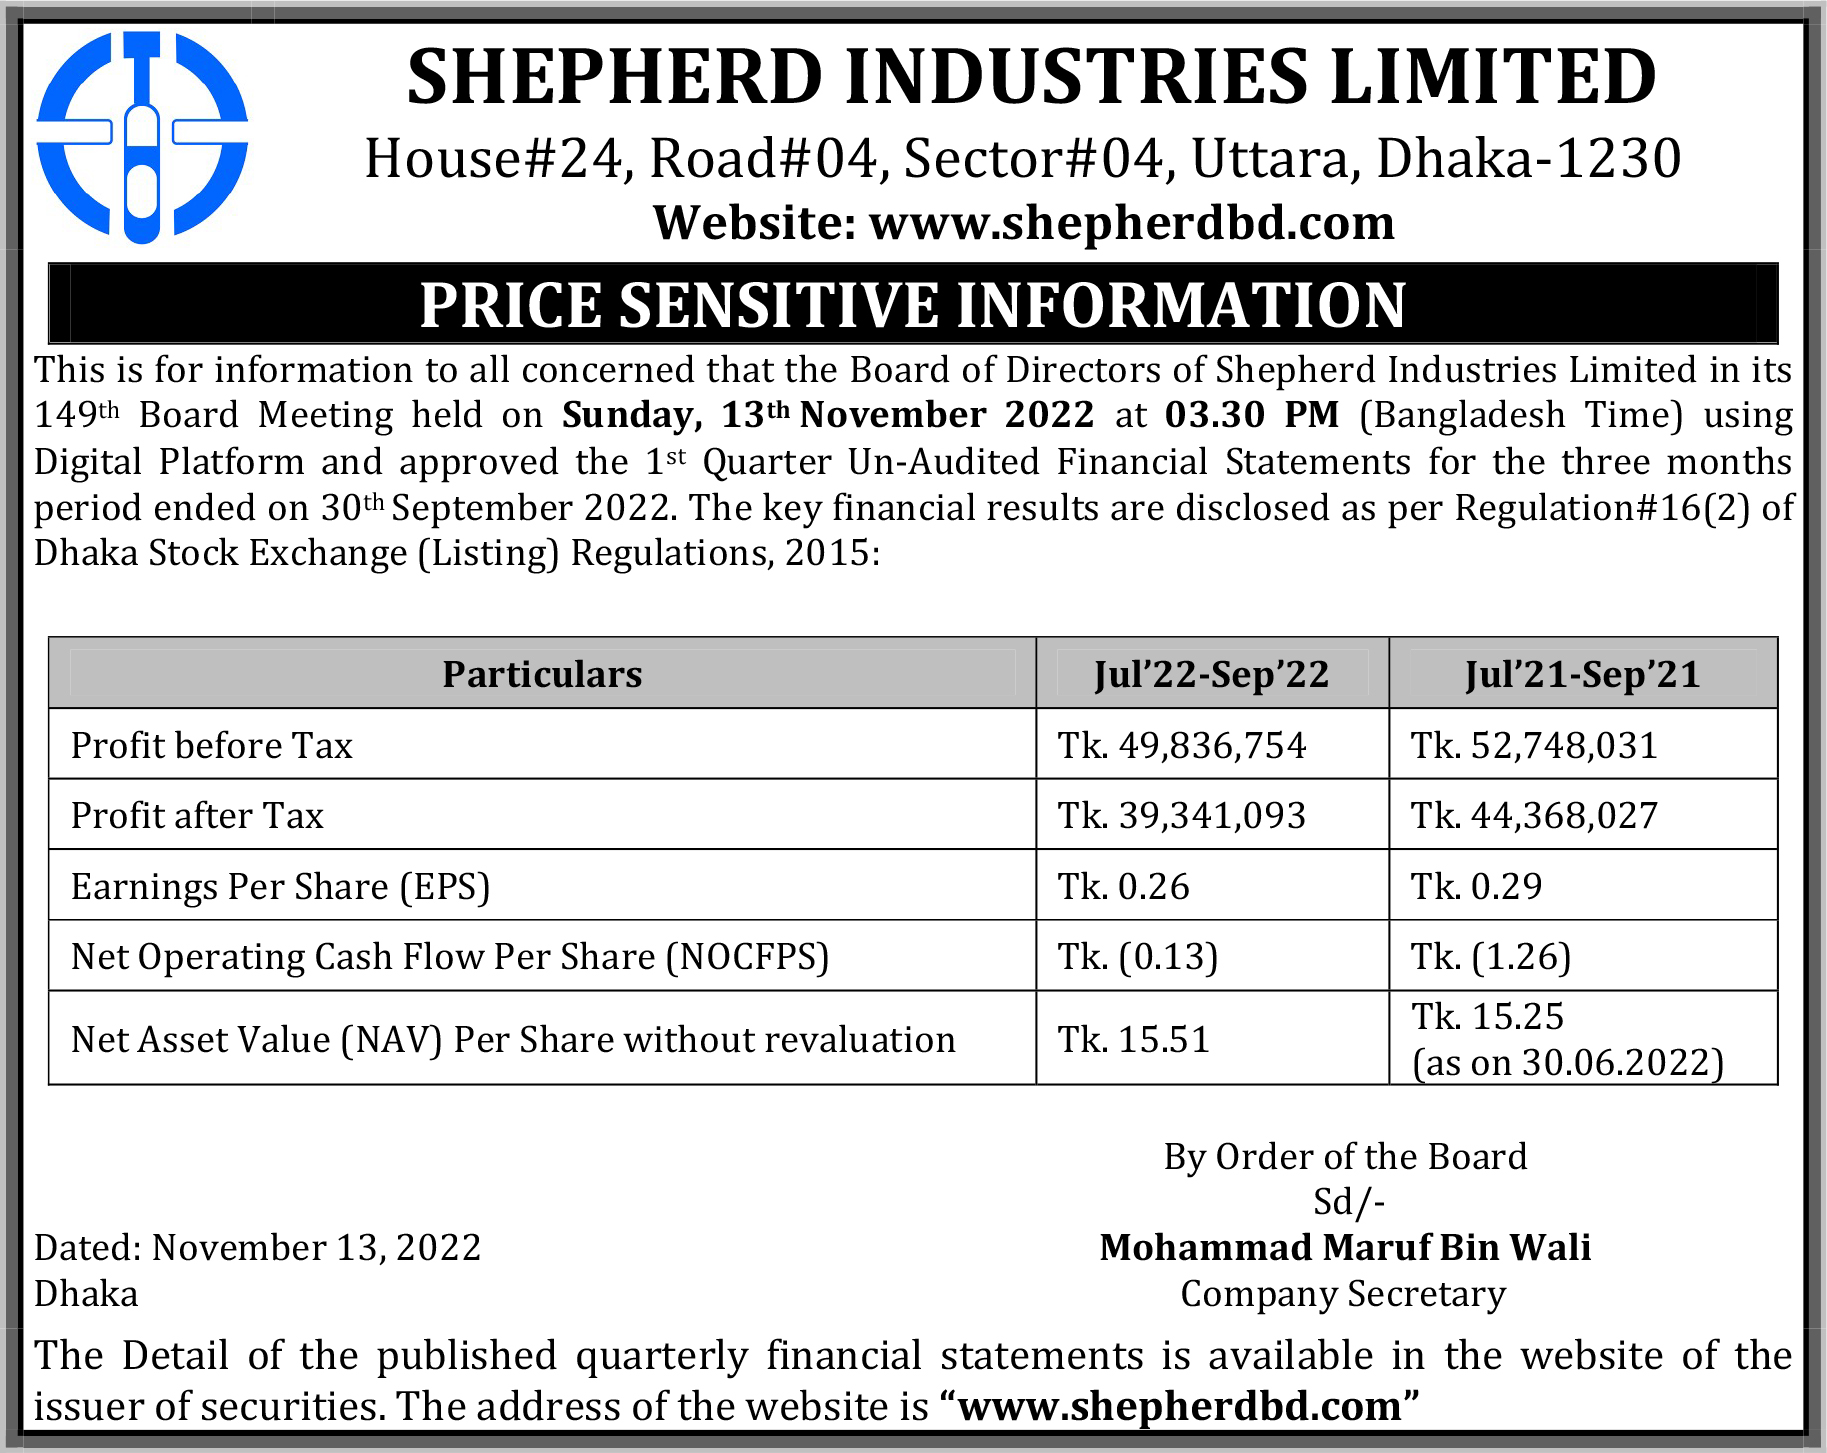 1Q Price Sensitive Information of Shepherd Industries Limited